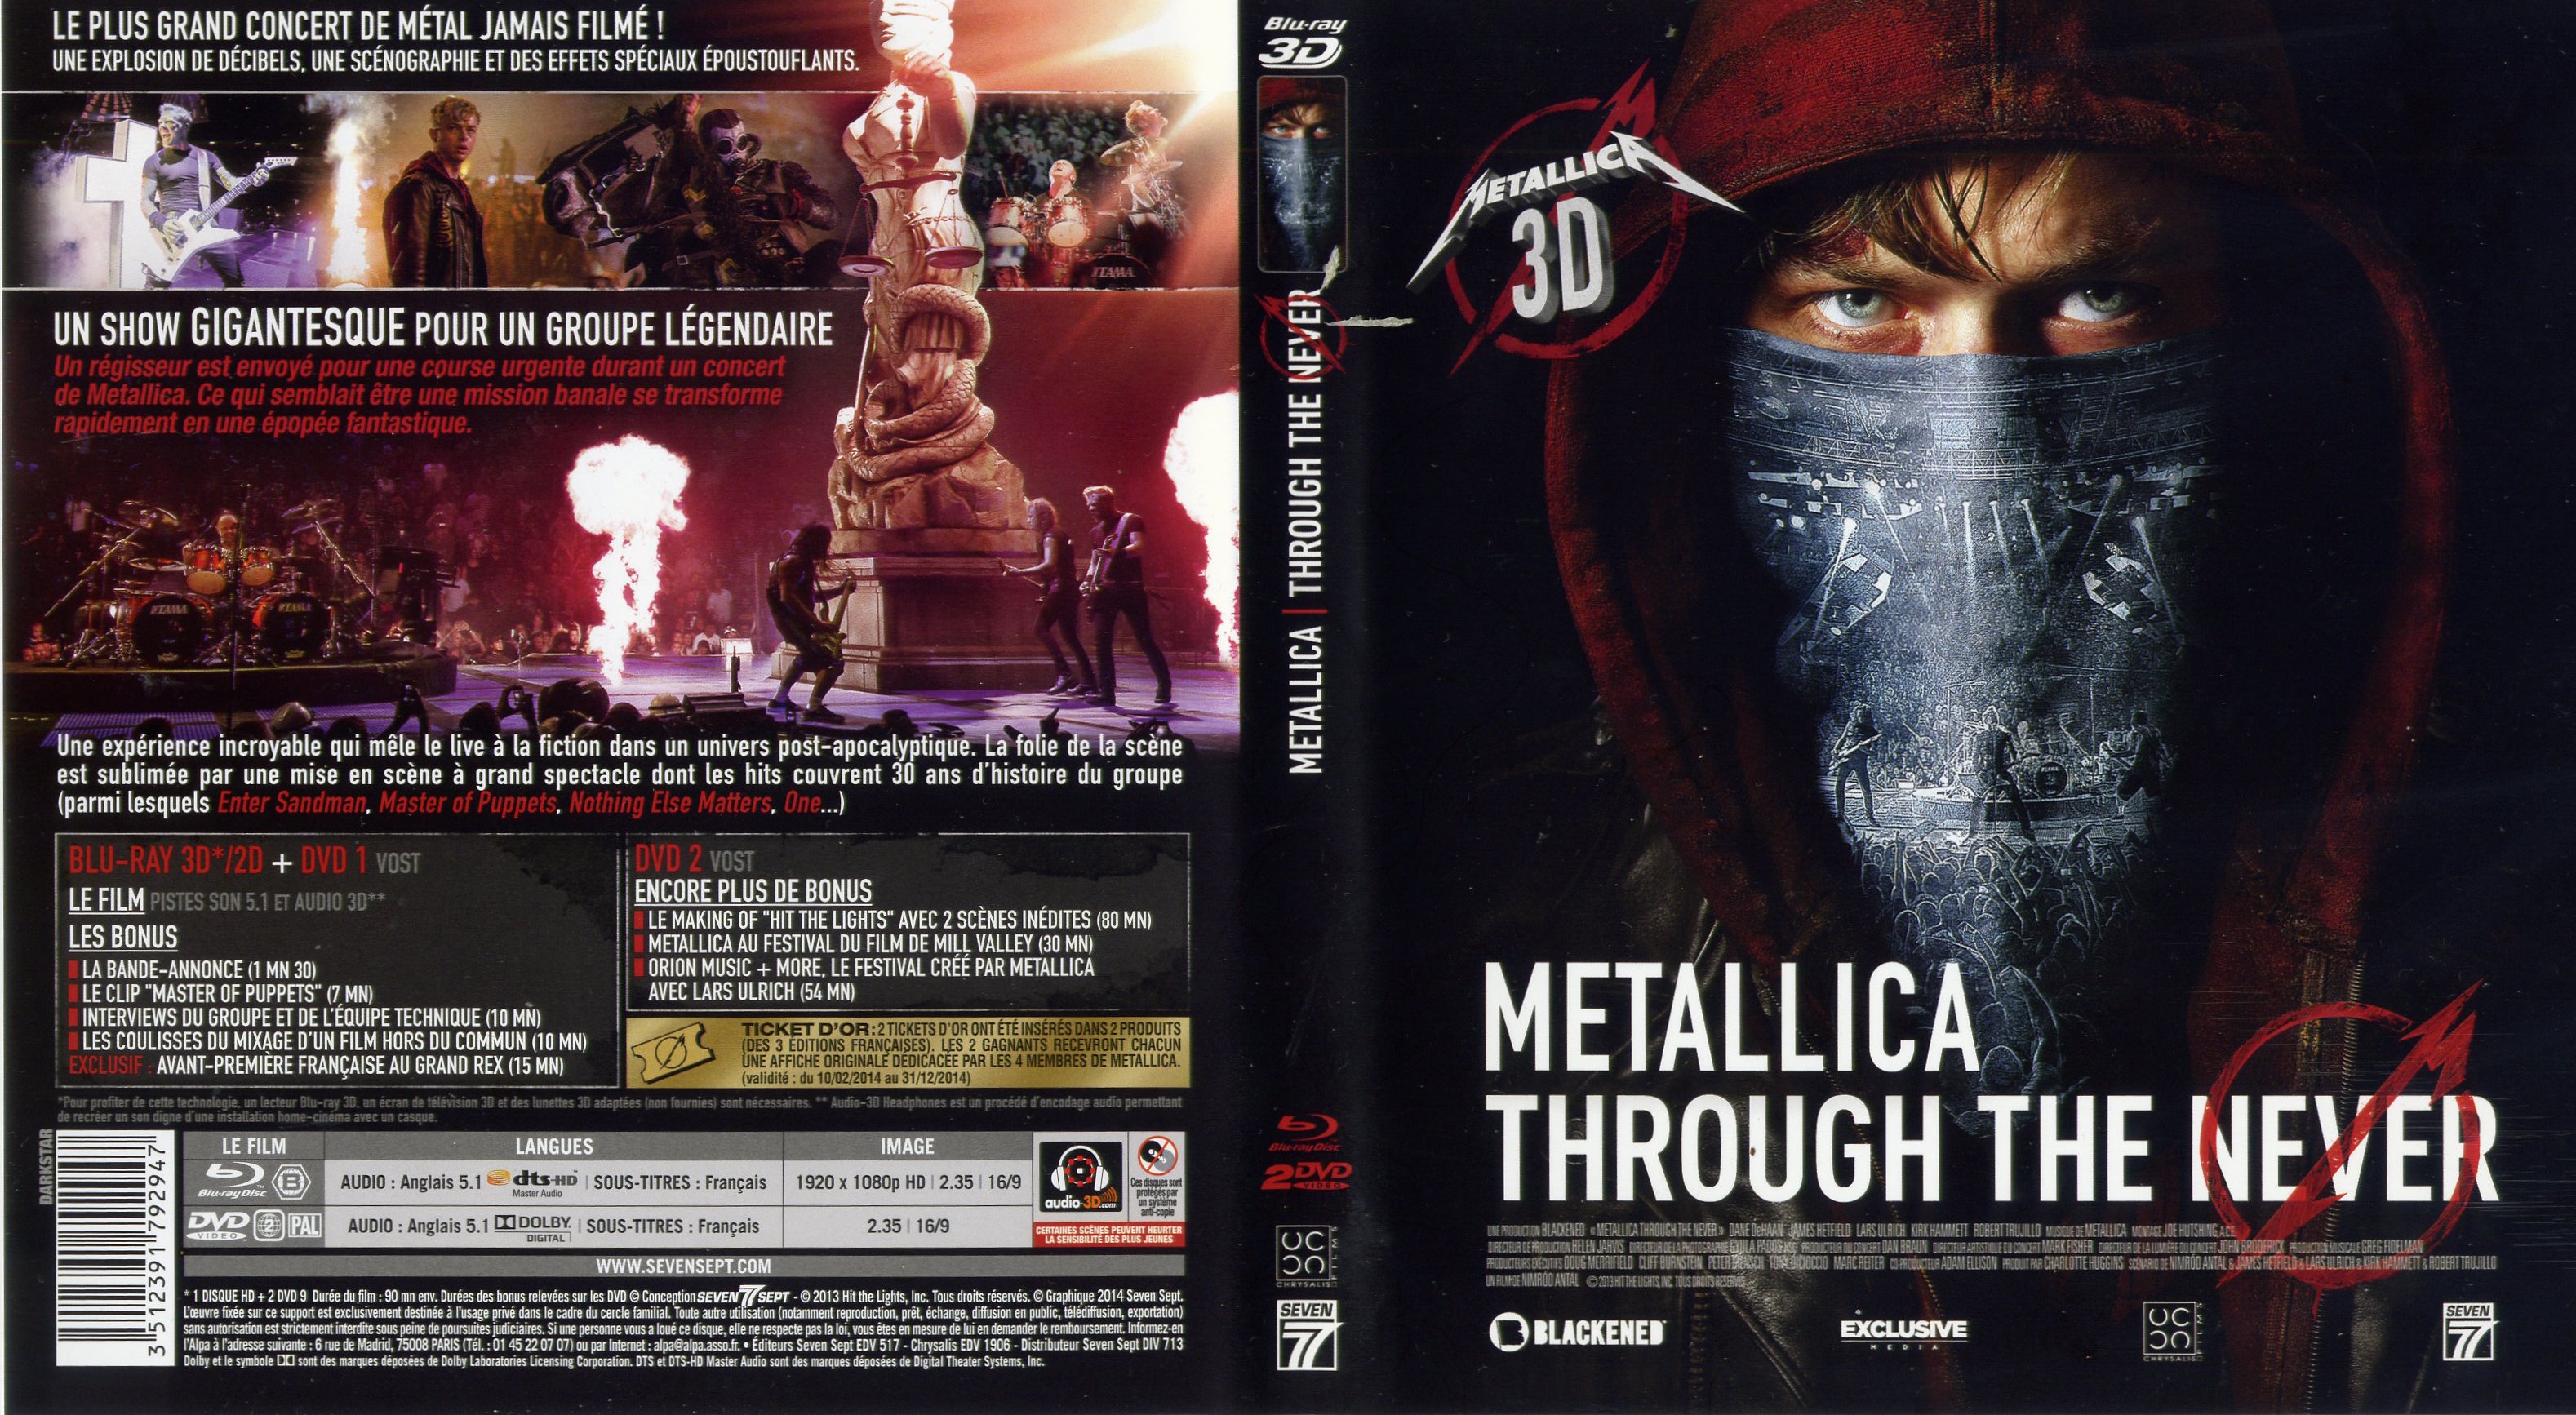 Jaquette DVD Metallica through the never (BLU-RAY)